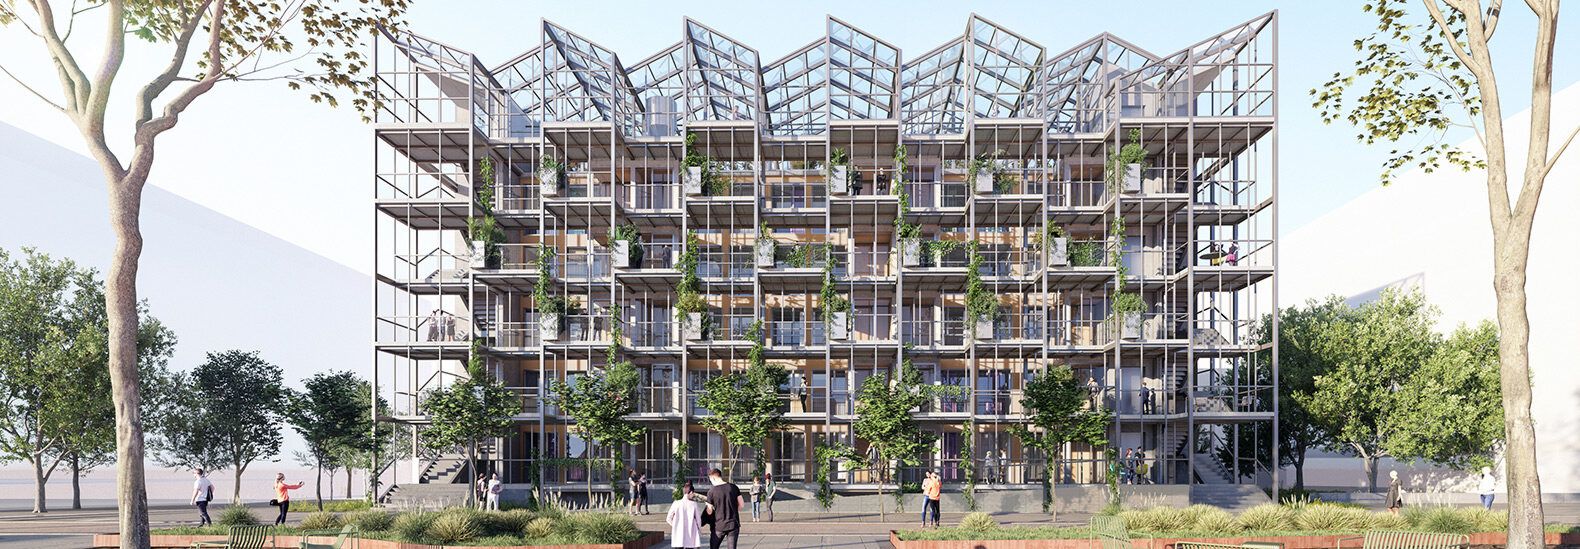 DMAA designs Residential Greenhouse in Germany